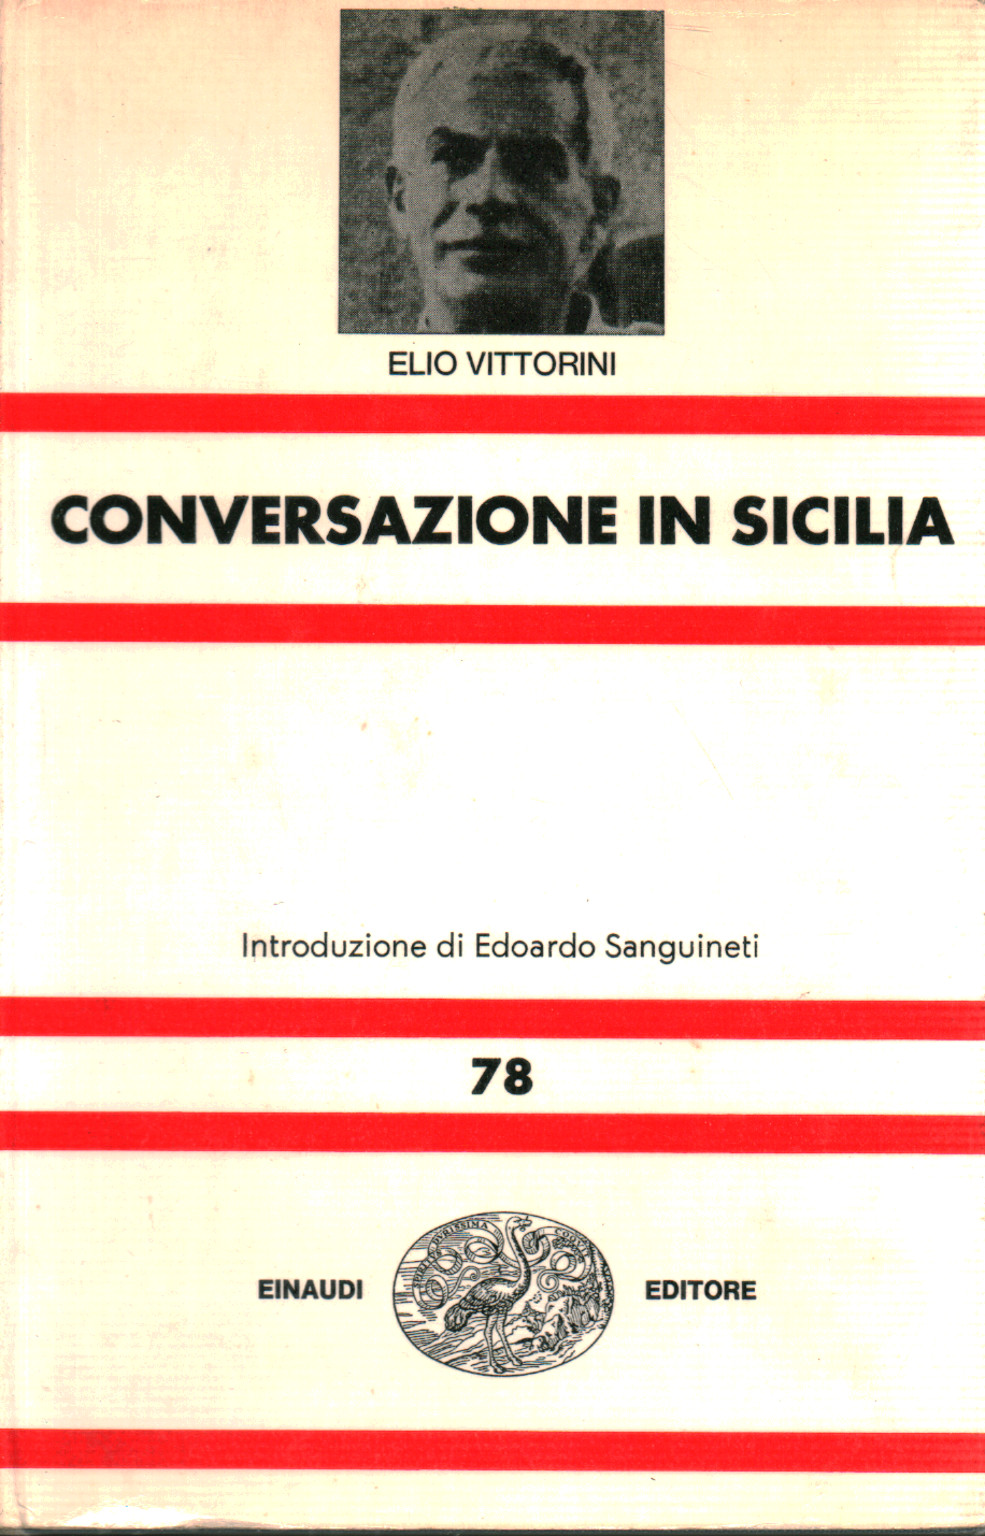 Conversation in Sicily